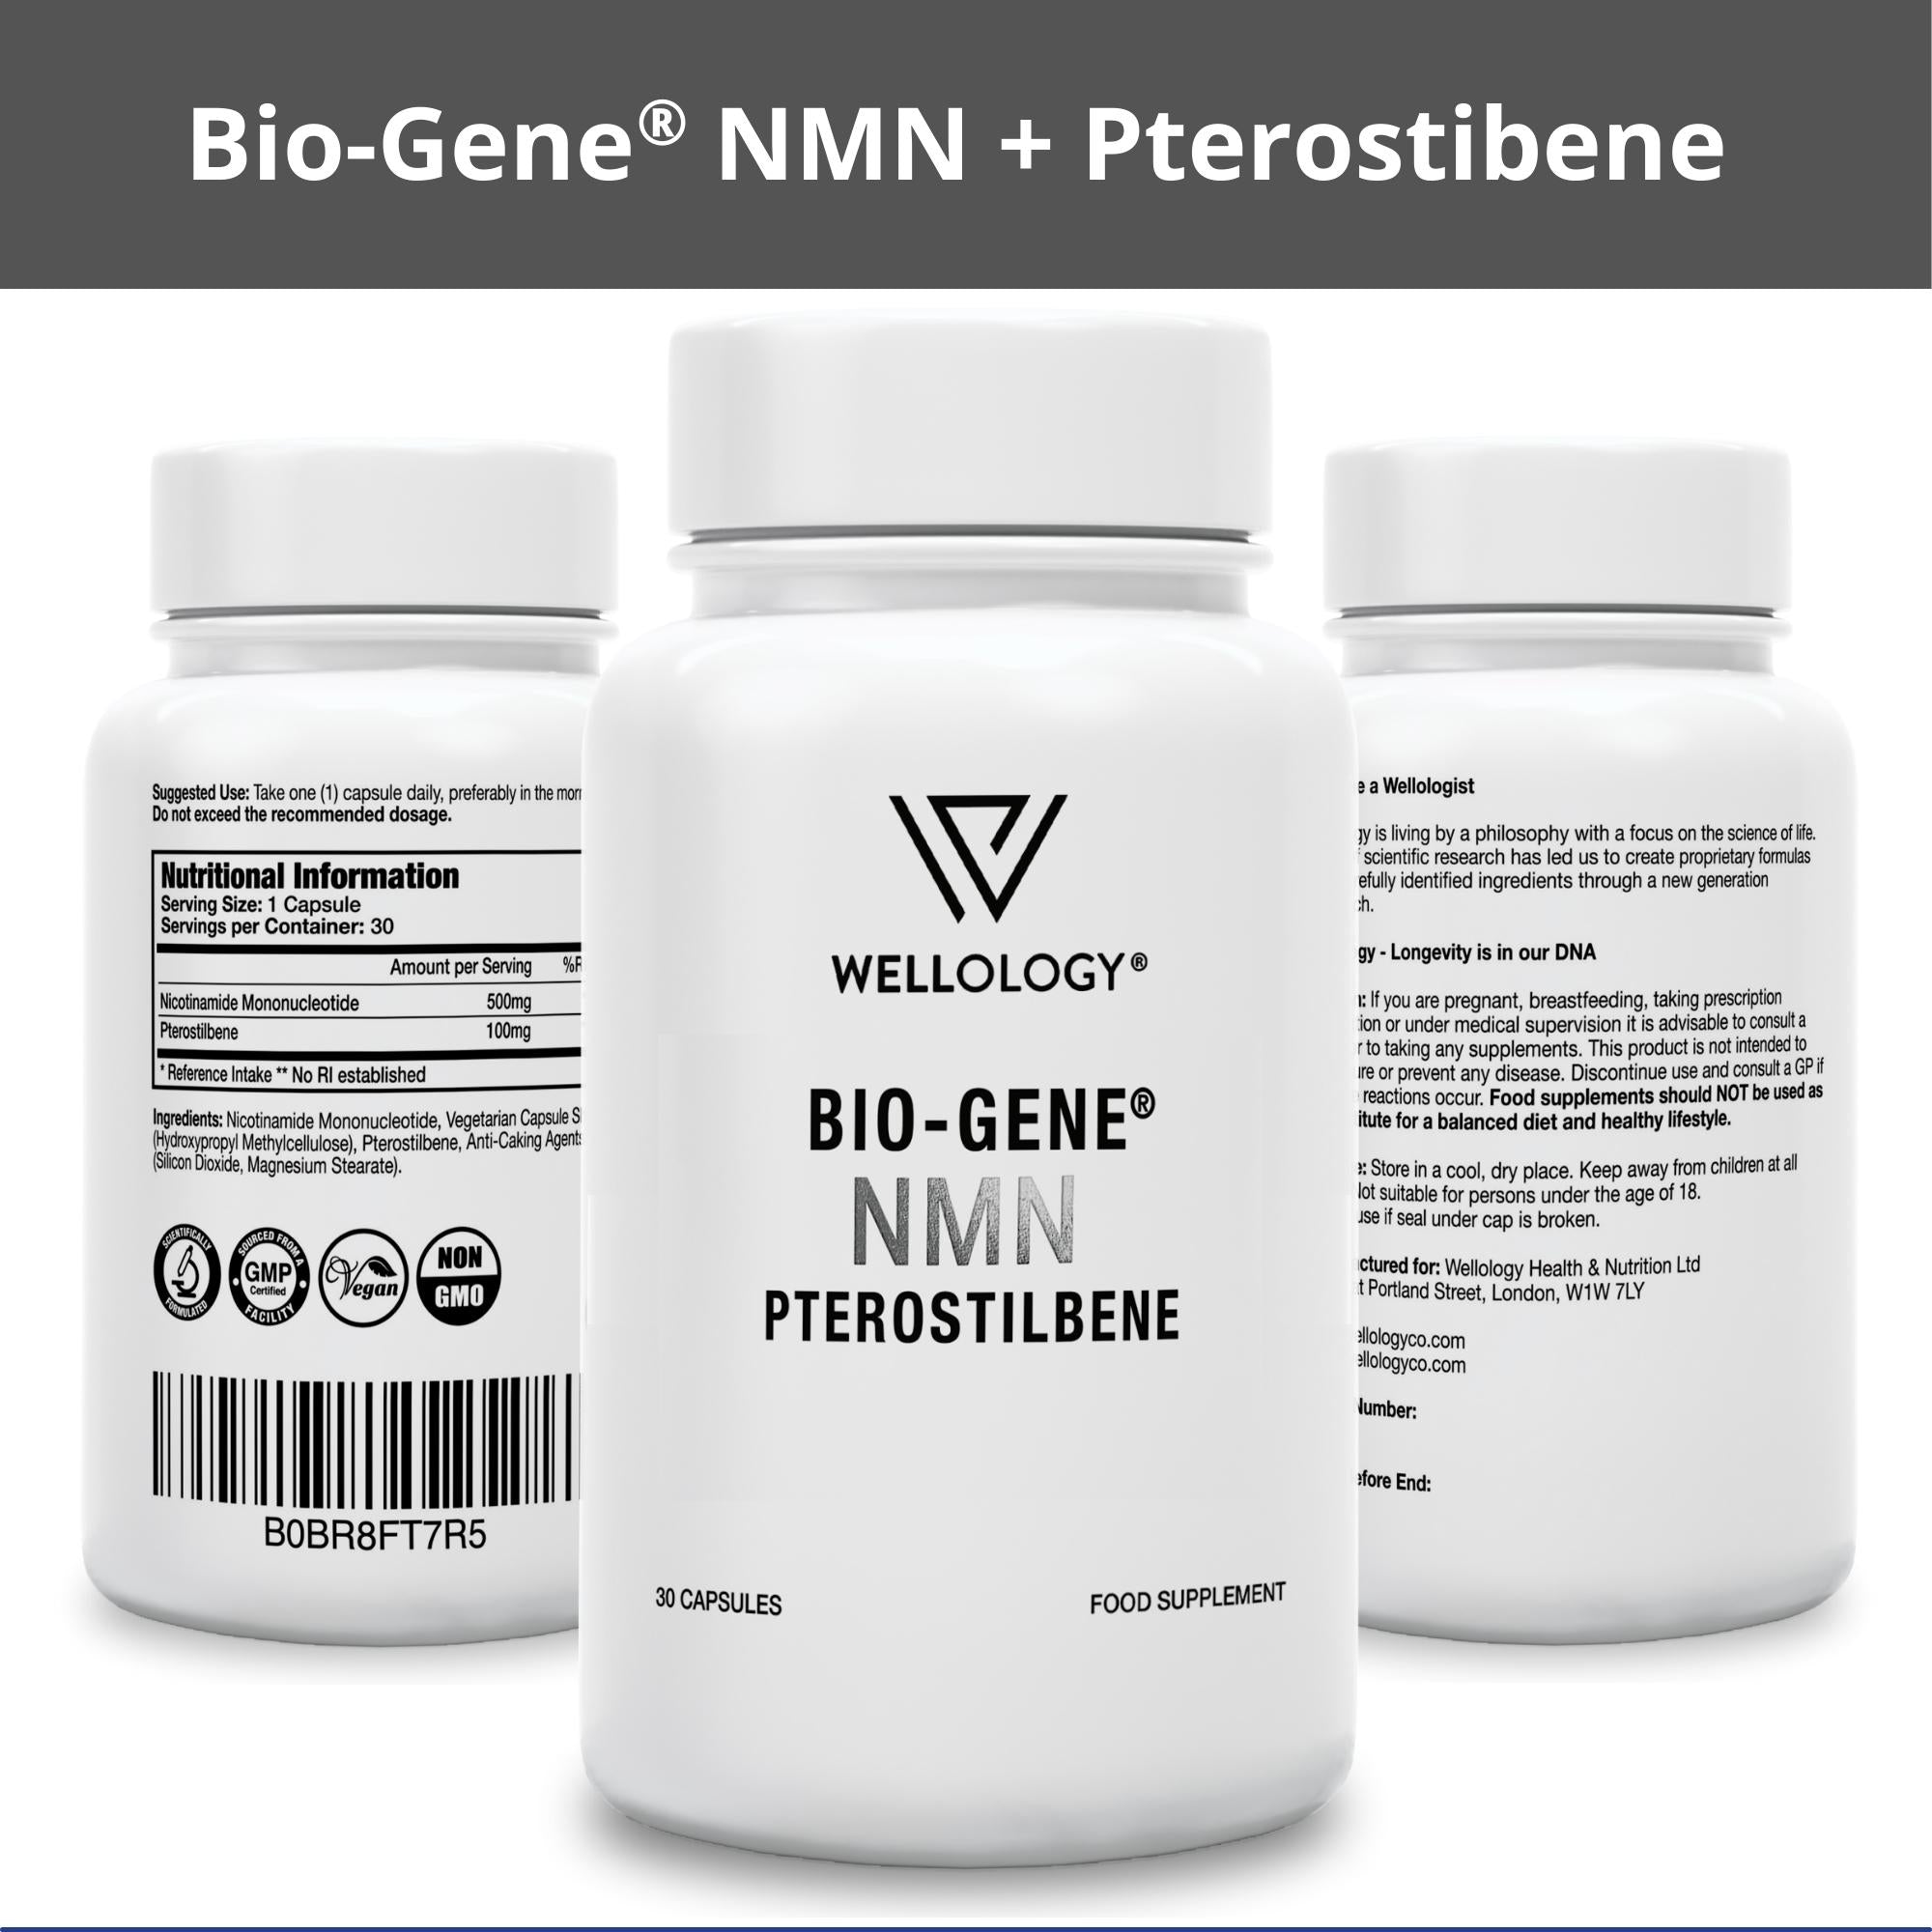 Bio-Gene NMN Pterostilbene